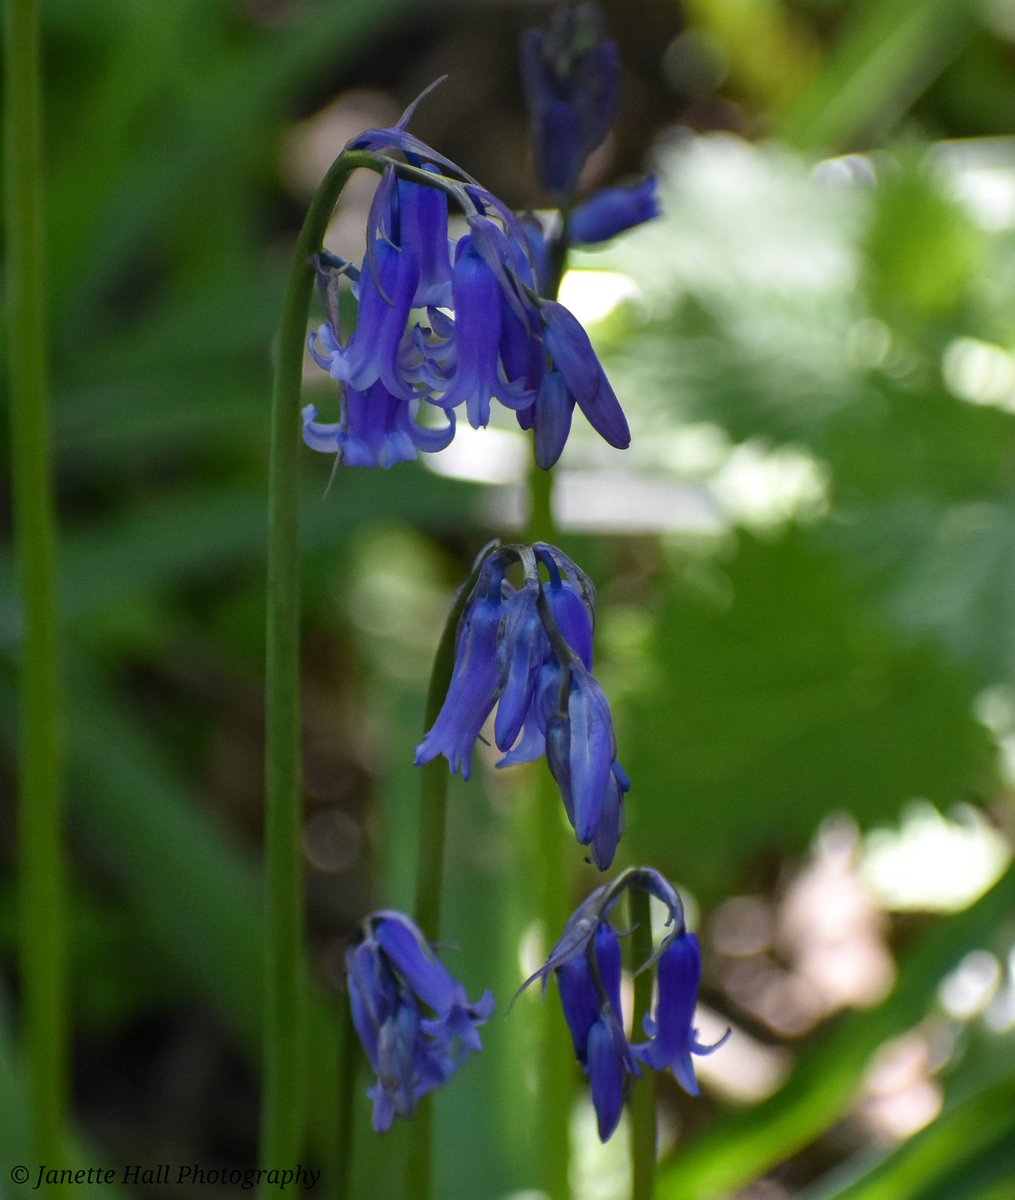 Bluebells 💙💜
#bluebells #purple #weather #loveukweather #lancashire #colours #color #nature #NaturePhotography #NatureBeauty #naturelovers #sky #sun #flowers